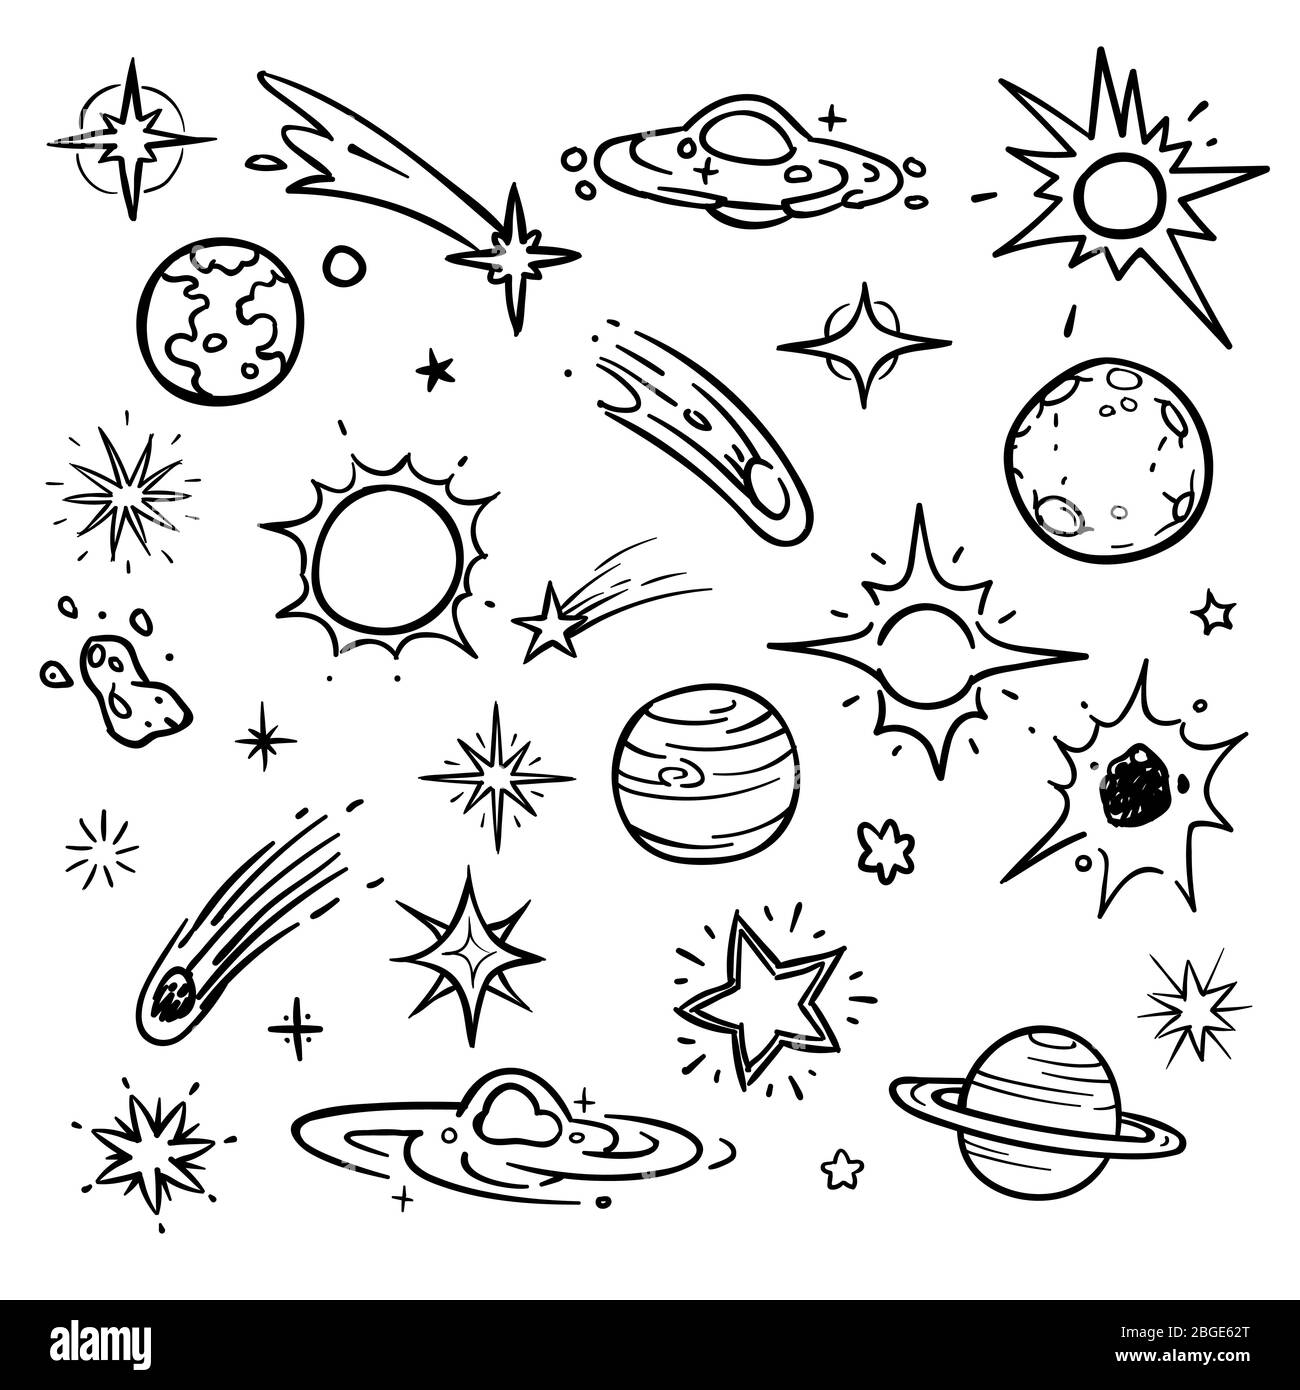 Space doodle vector elements. 